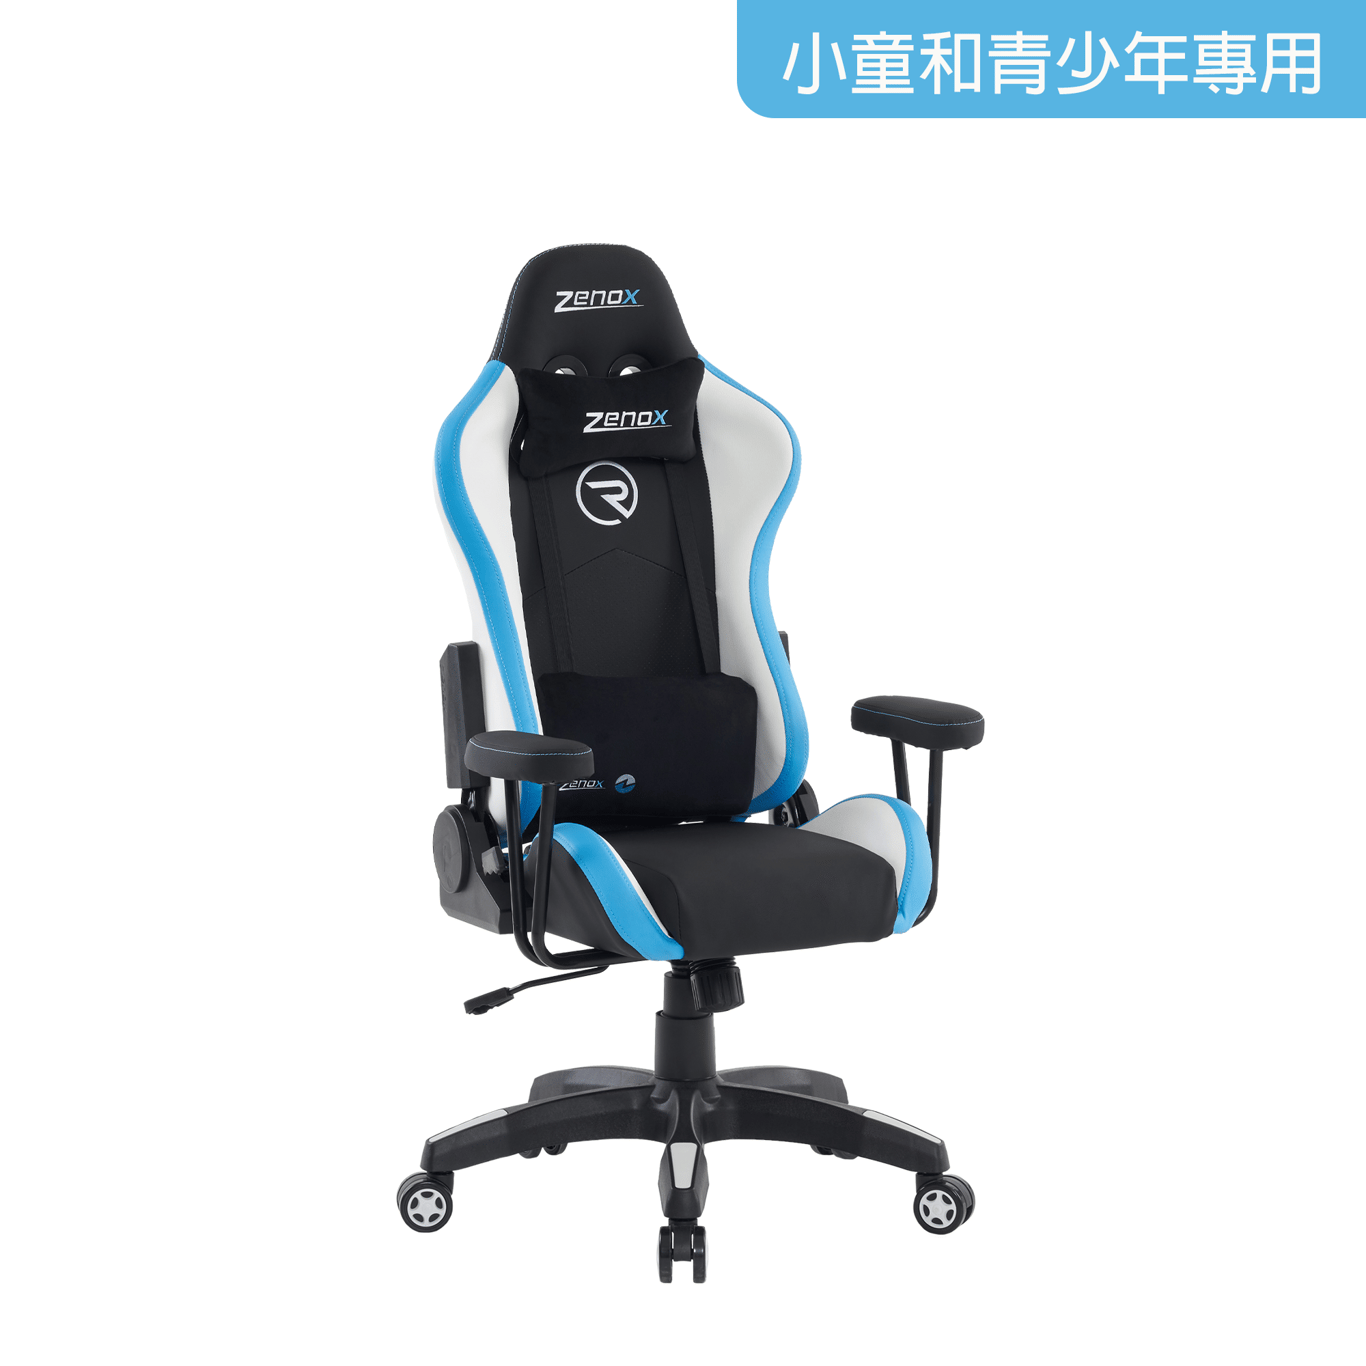 Zenox Rookie-MK2 Gaming Chair 兒童電競椅 - Sky Blue 天藍色